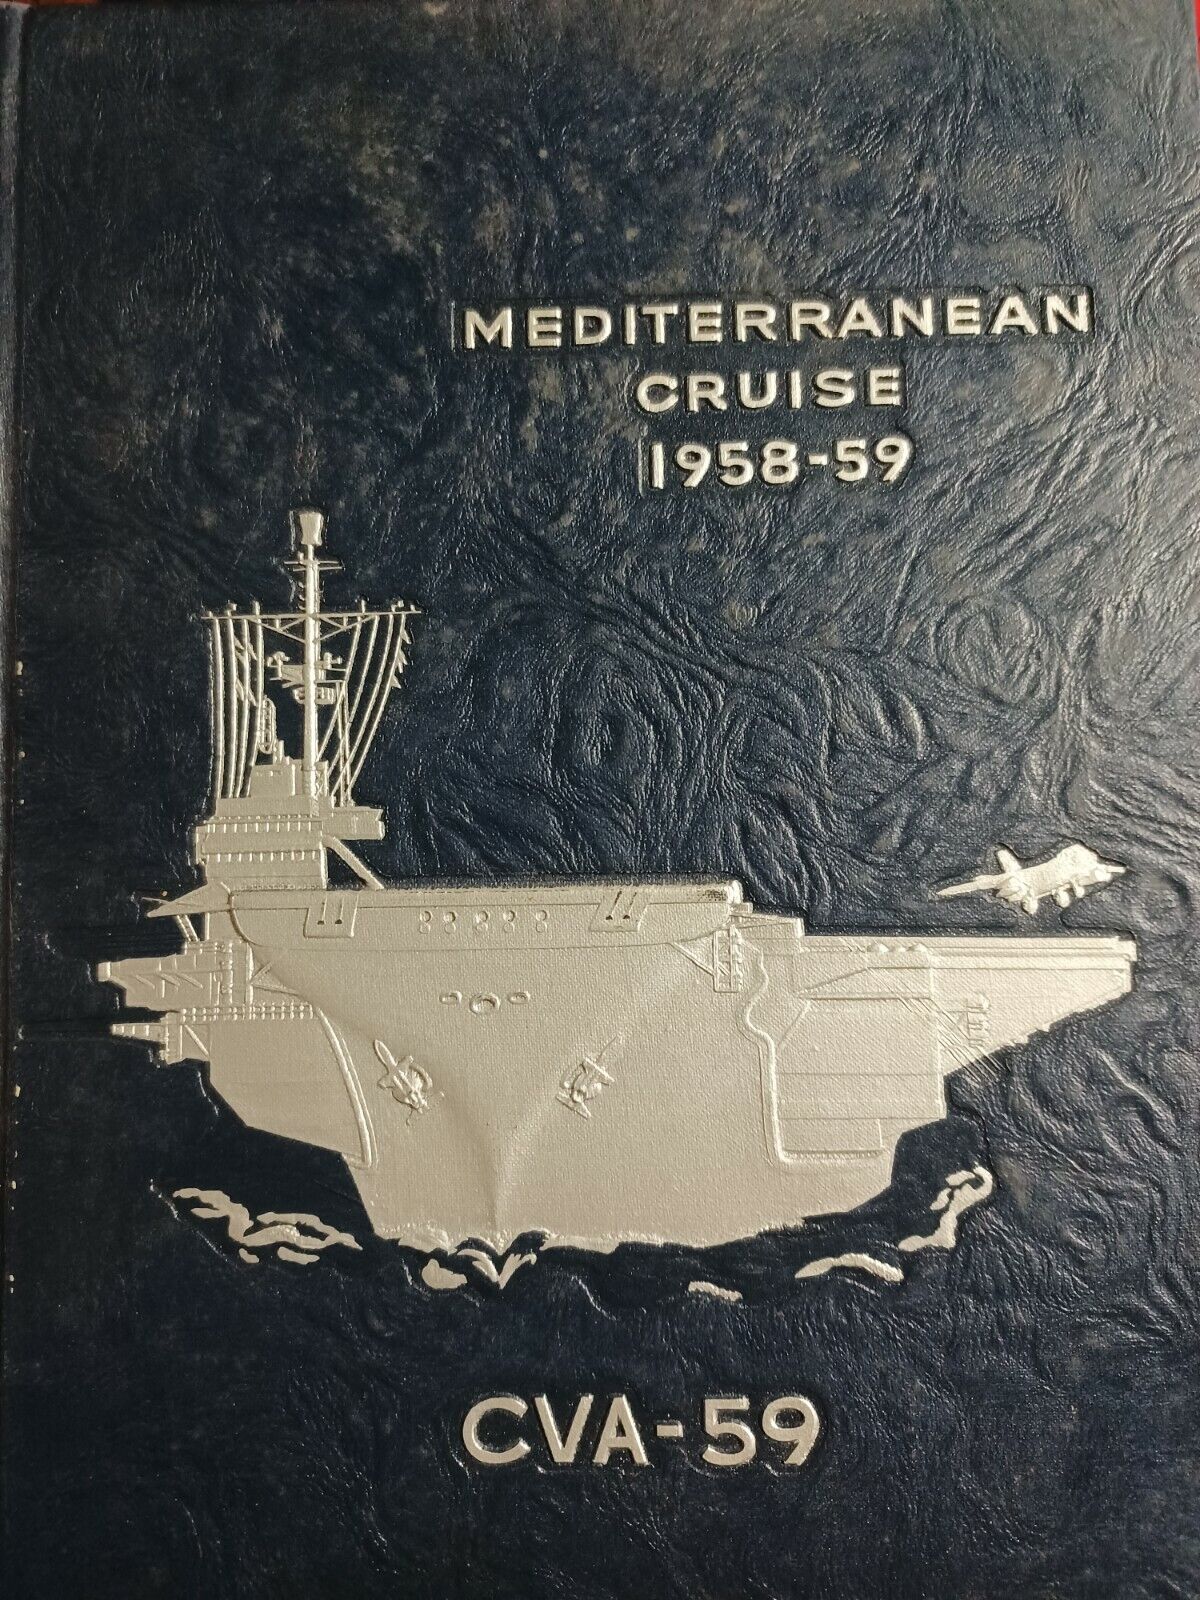 1958-1959 USS Forrestal Mediterranean Cruise Book CVA59+ manuscript log journal 